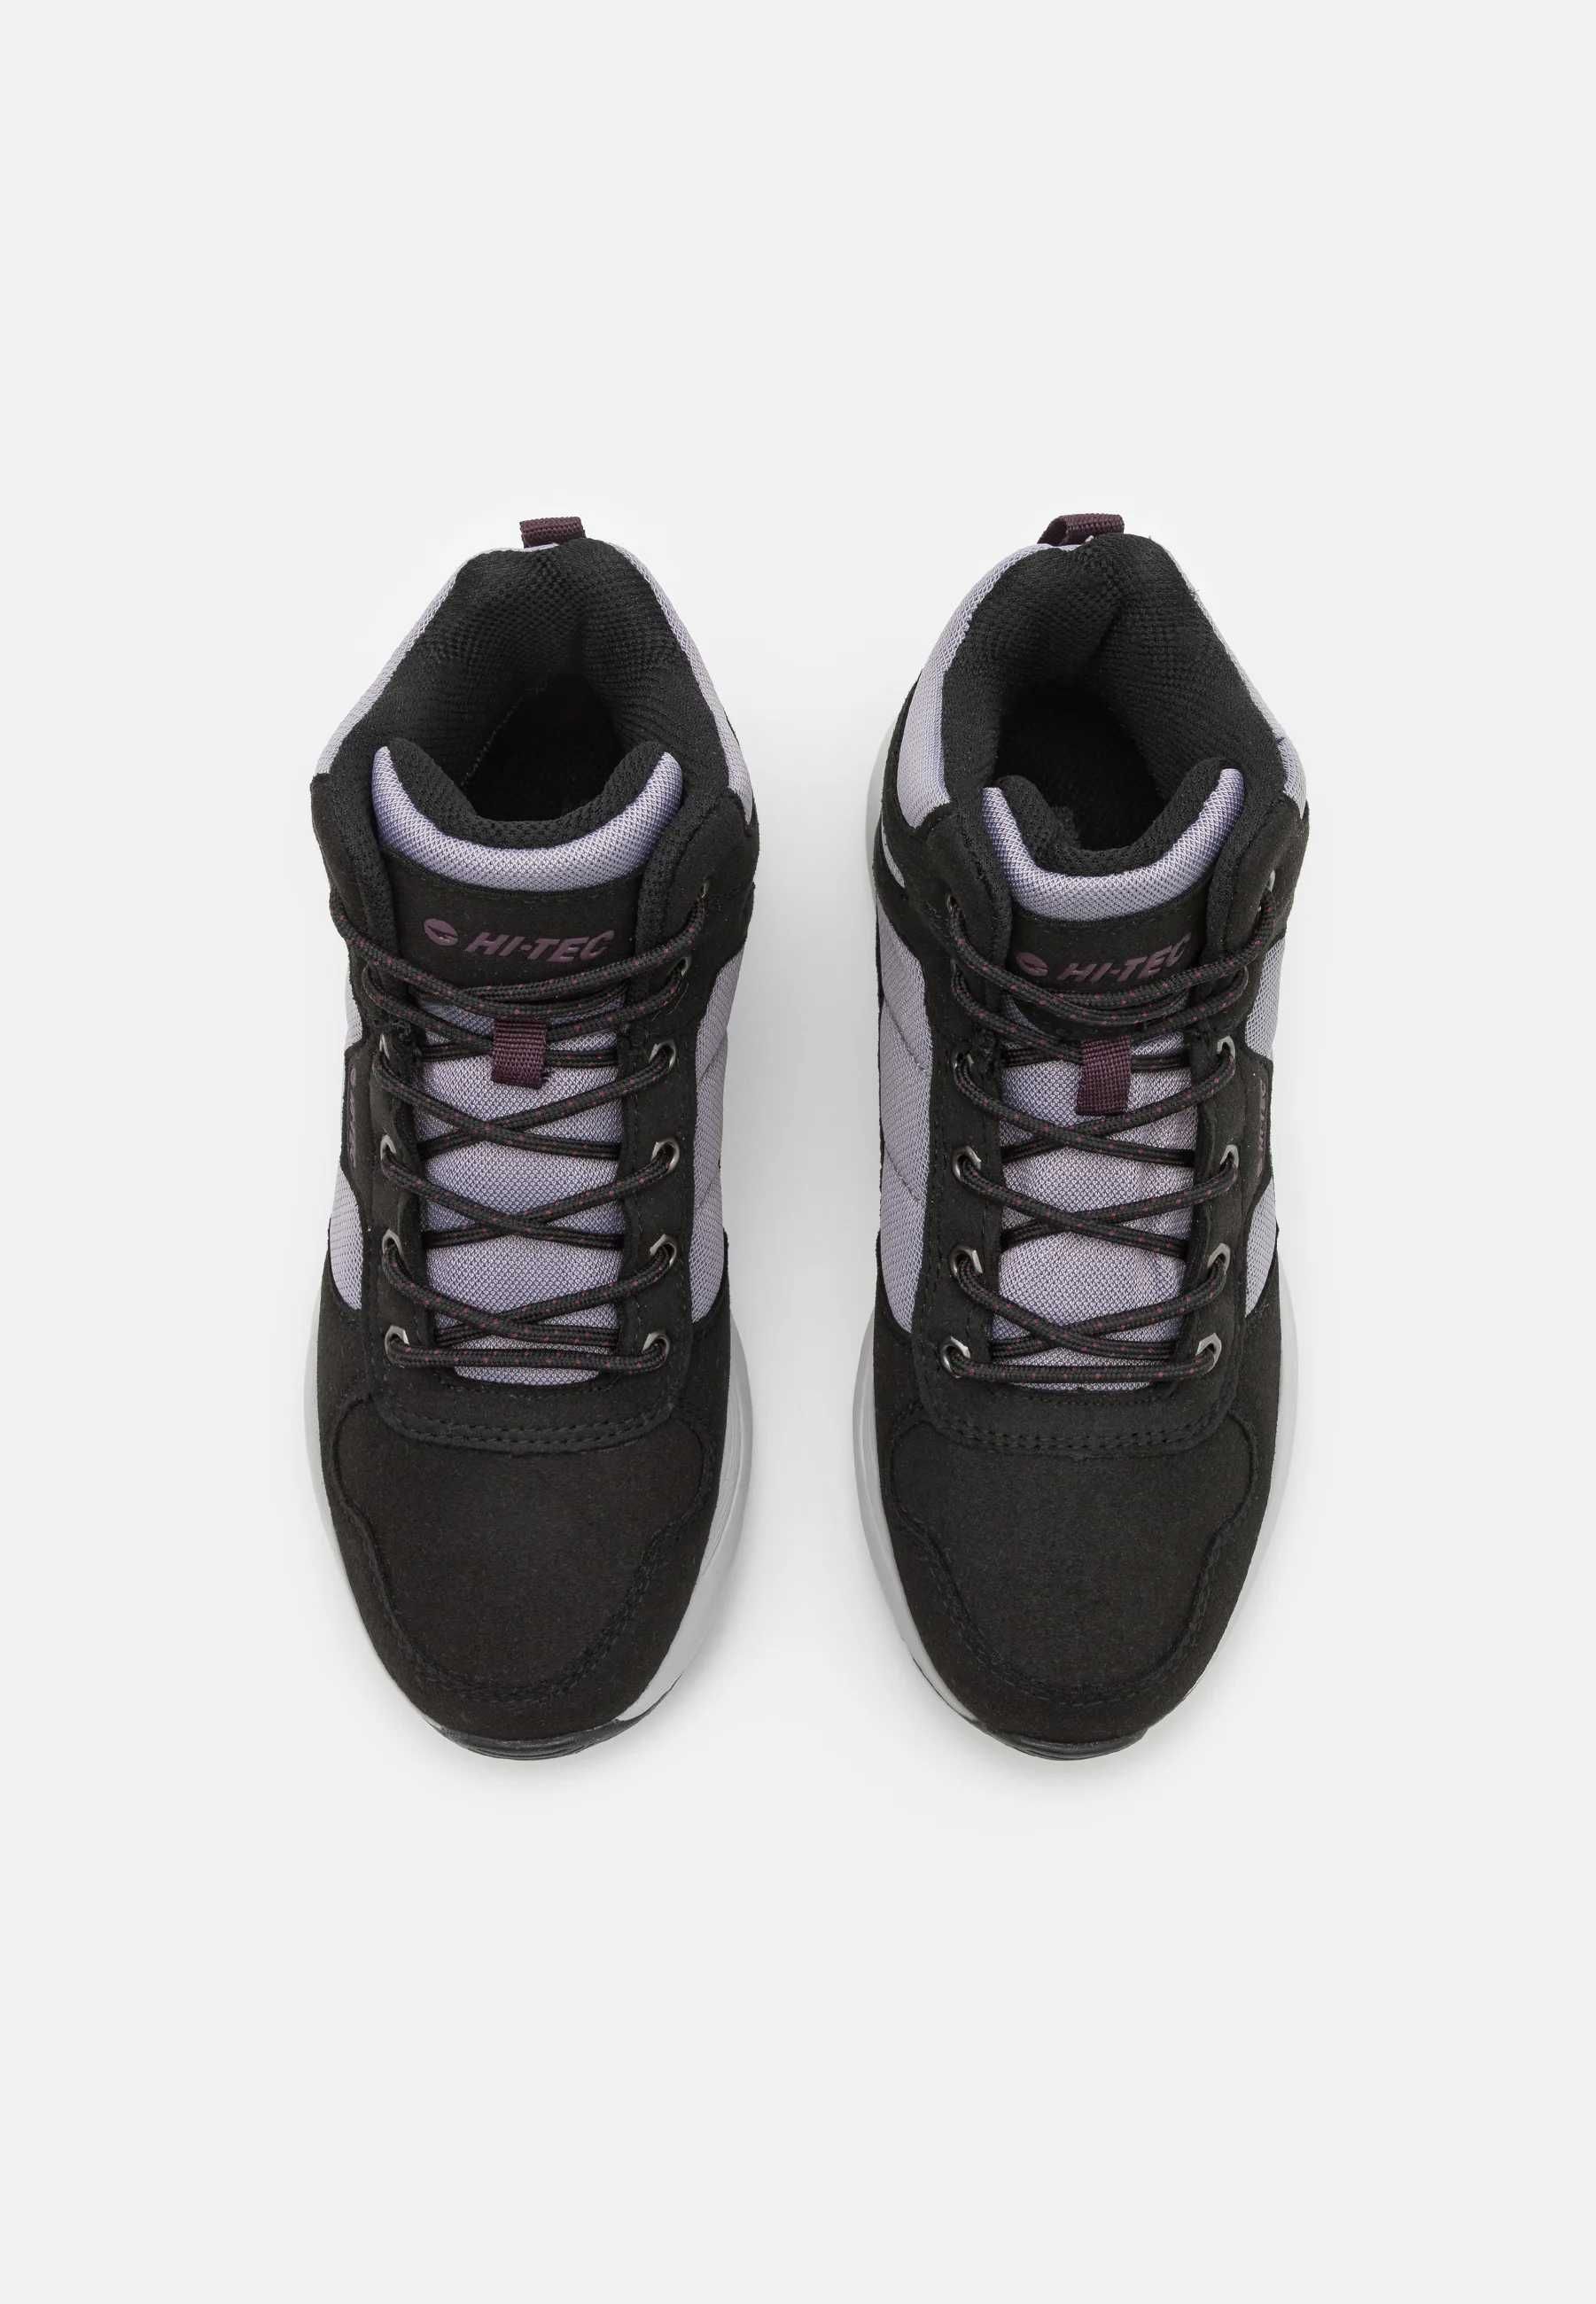 NOWE buty HI-TEC 36 zimowe wodoodporne hikingowe czarne trapery obuwie